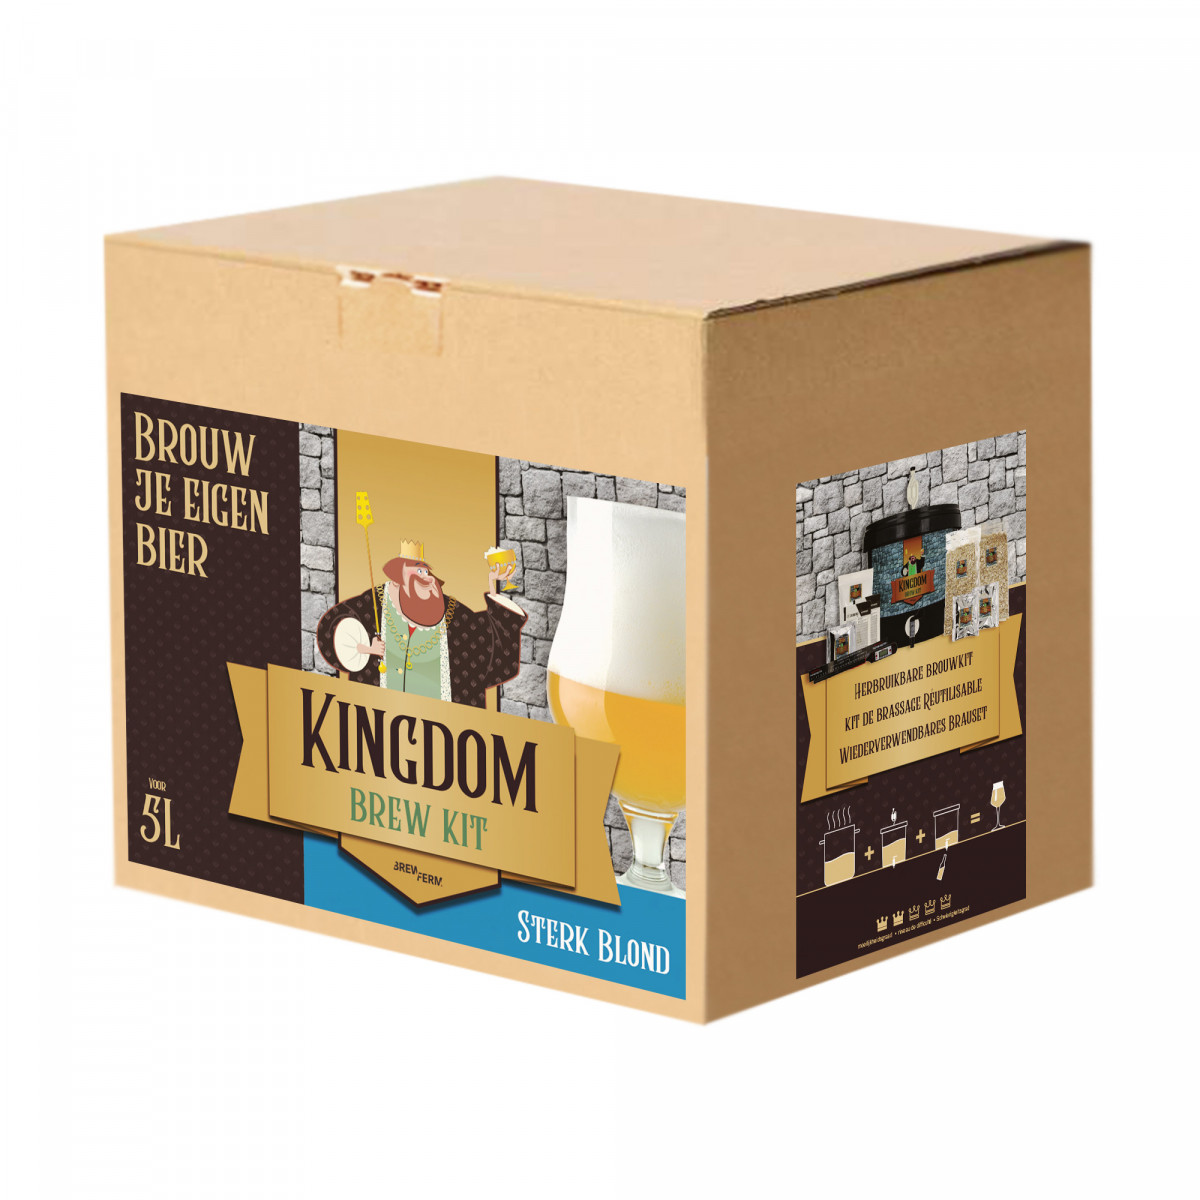 Kingdom Brew Kit - Sterk blond